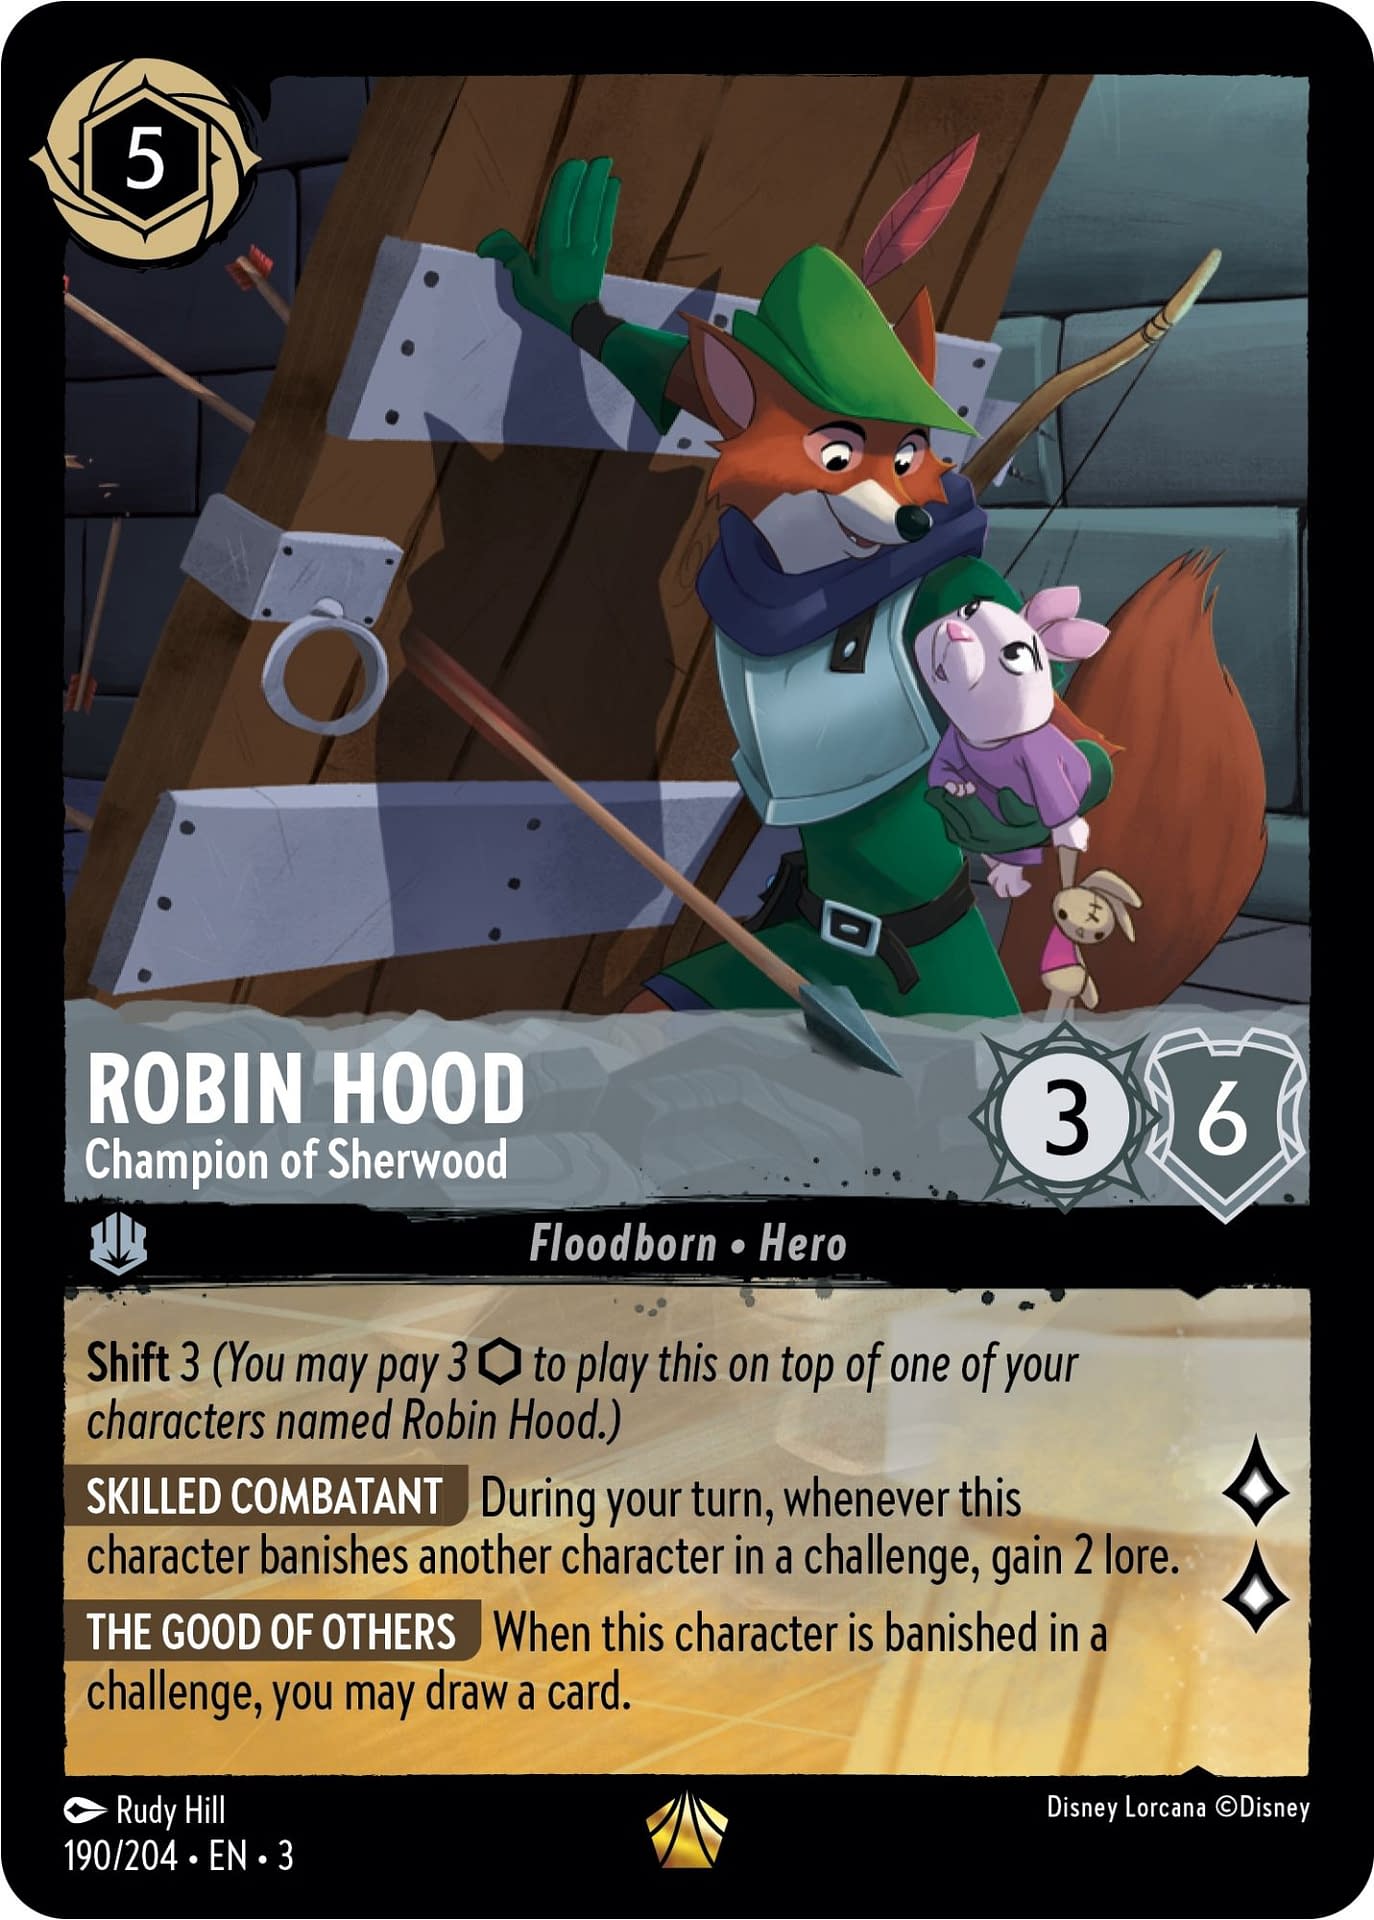 Disney's Robin Hood Enters the Inklands for Disney Lorcana (Exclusive)